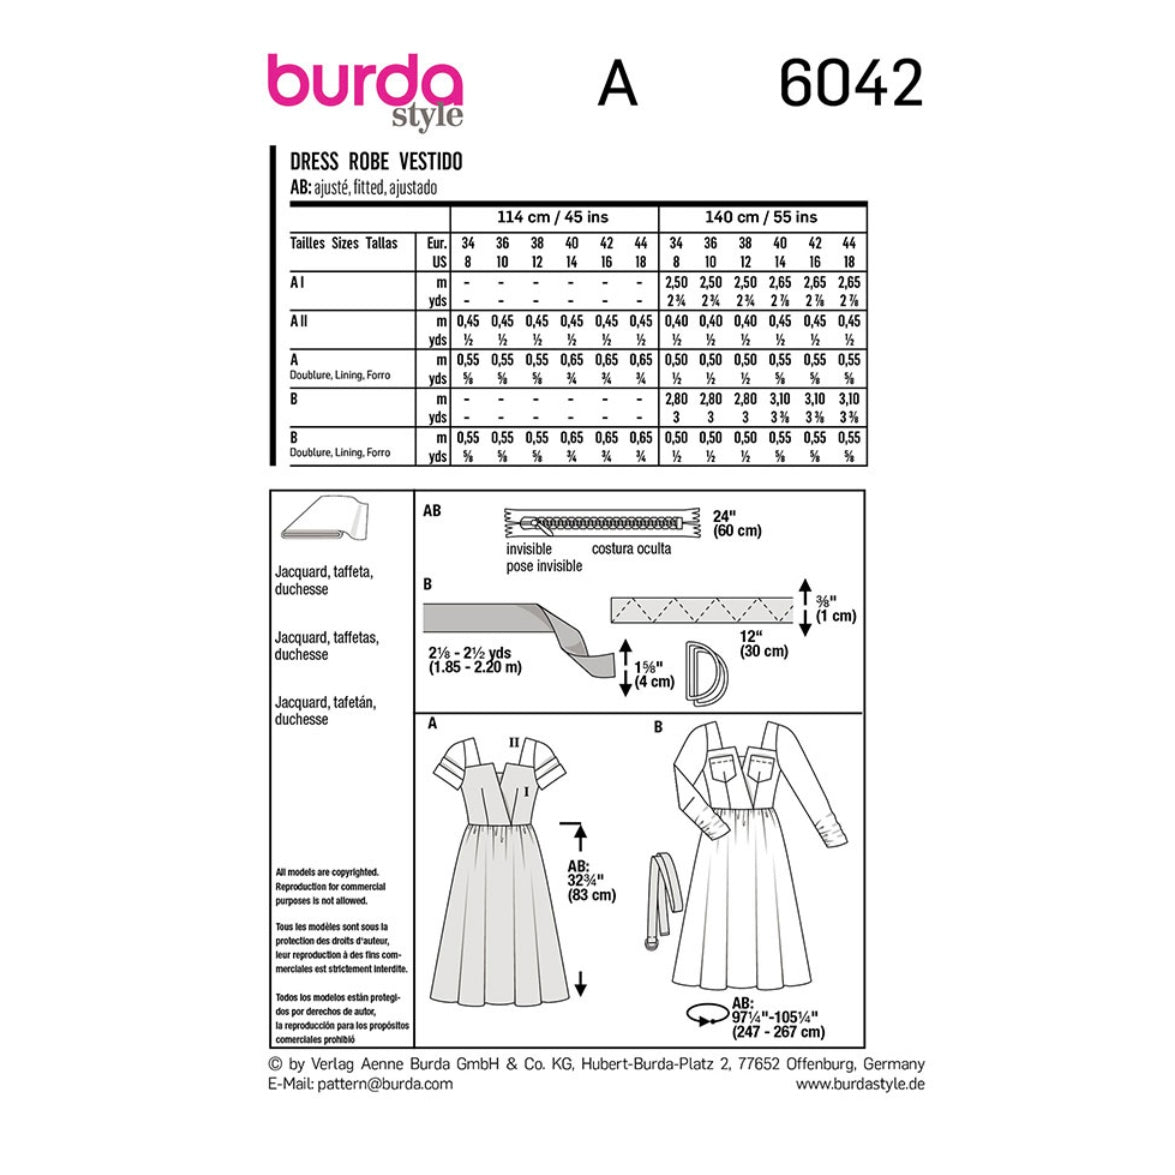 Burda Style Pattern No. 6042 Dress Dresses in Retro Look Arm Variant -   Canada